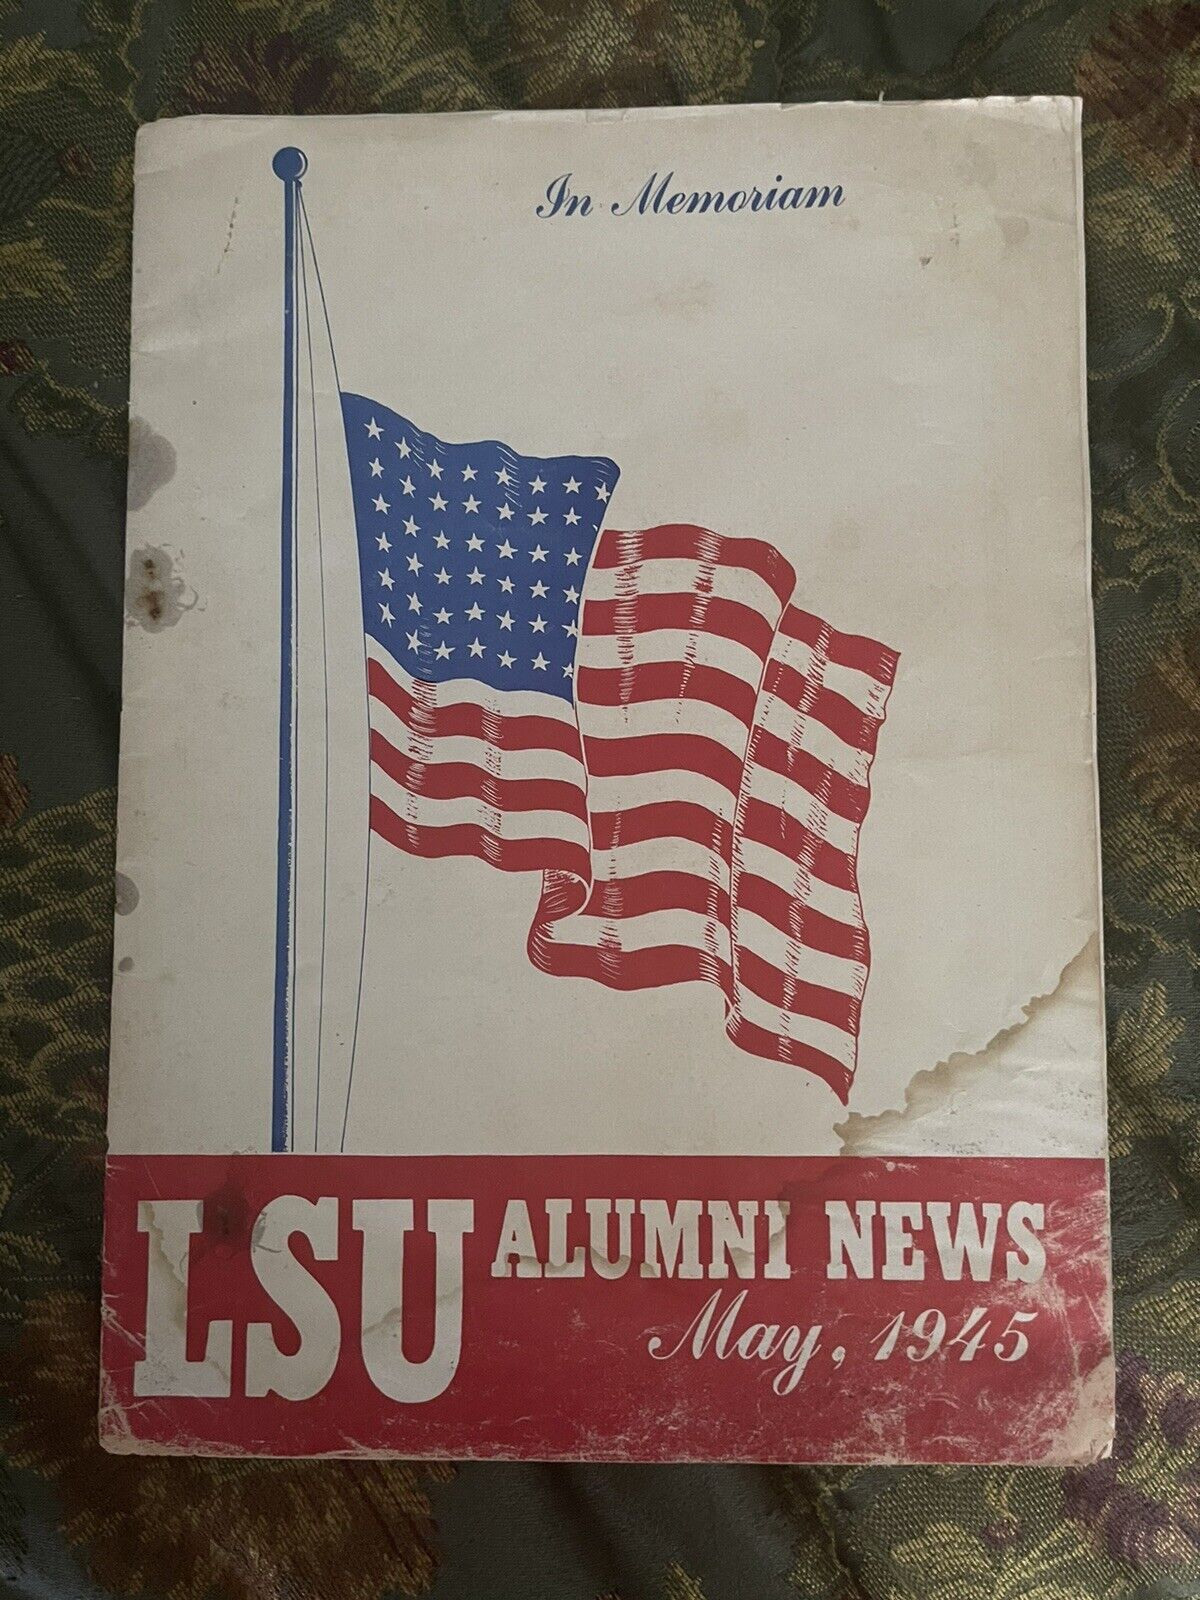 Rare WWII Era LSU Alumni News, May 1945 - WWII casualties - Including Alex Box